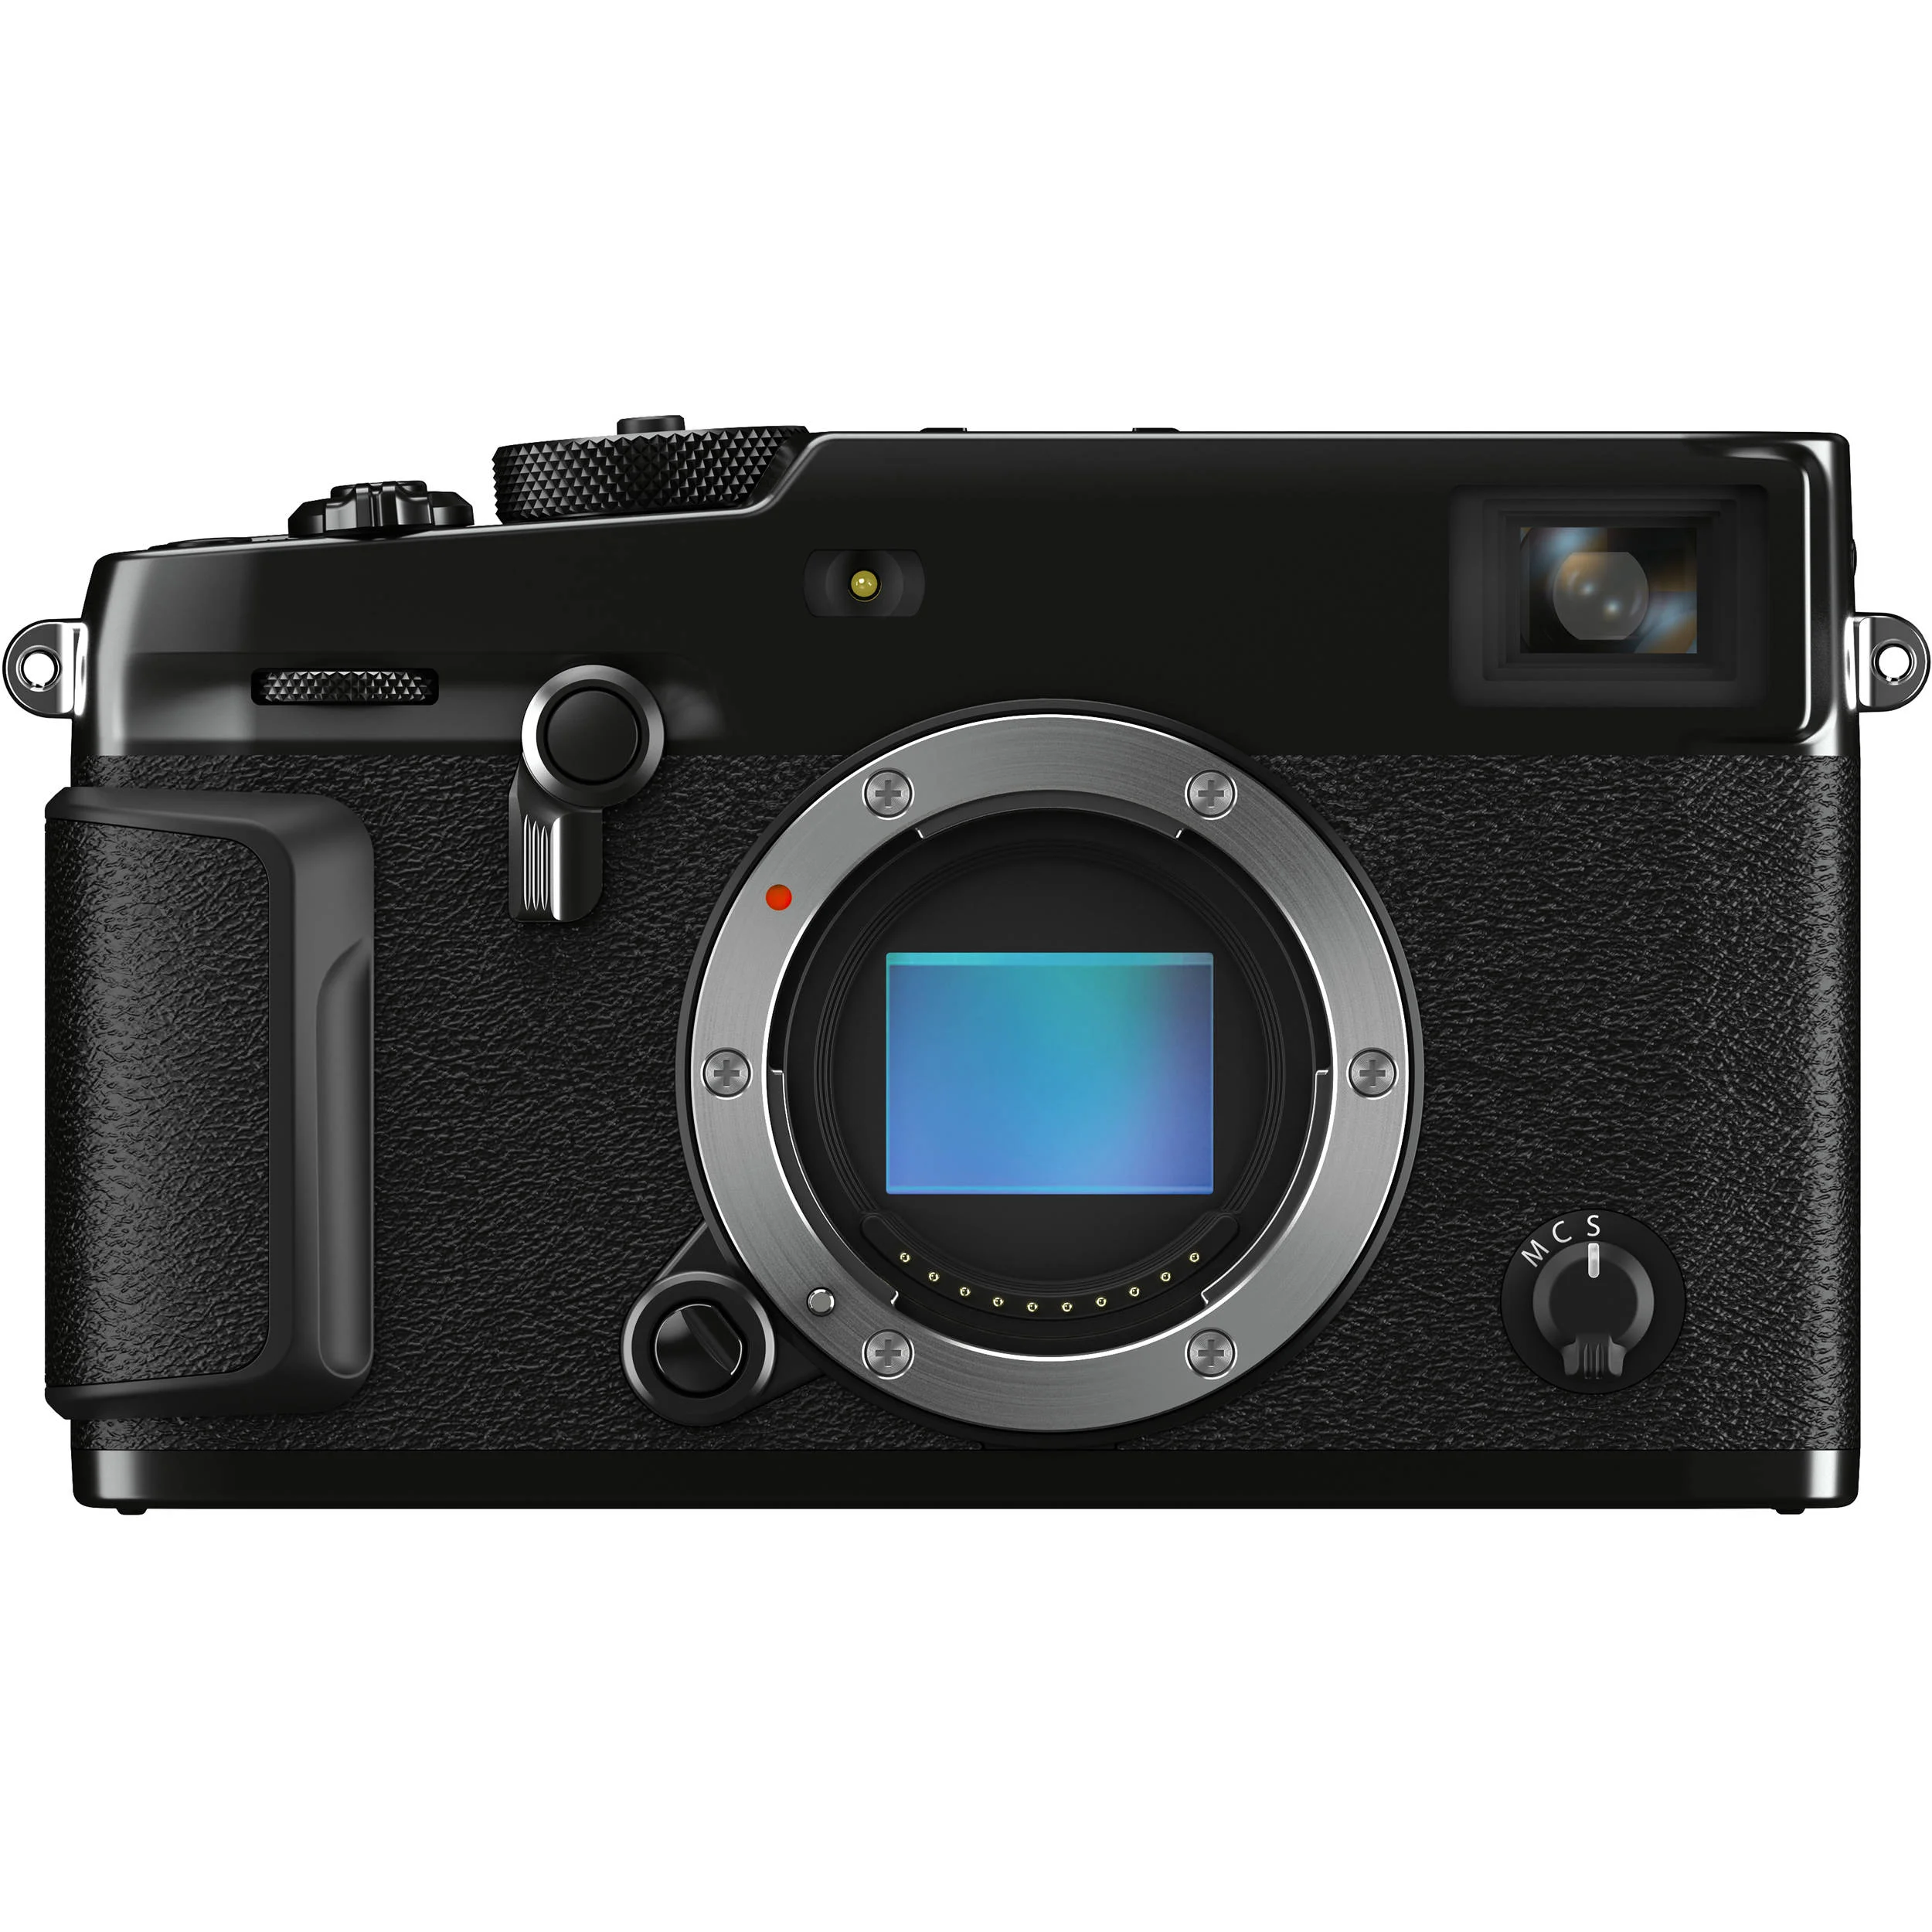 Máy ảnh Fujifilm X-Pro 3 (Black)